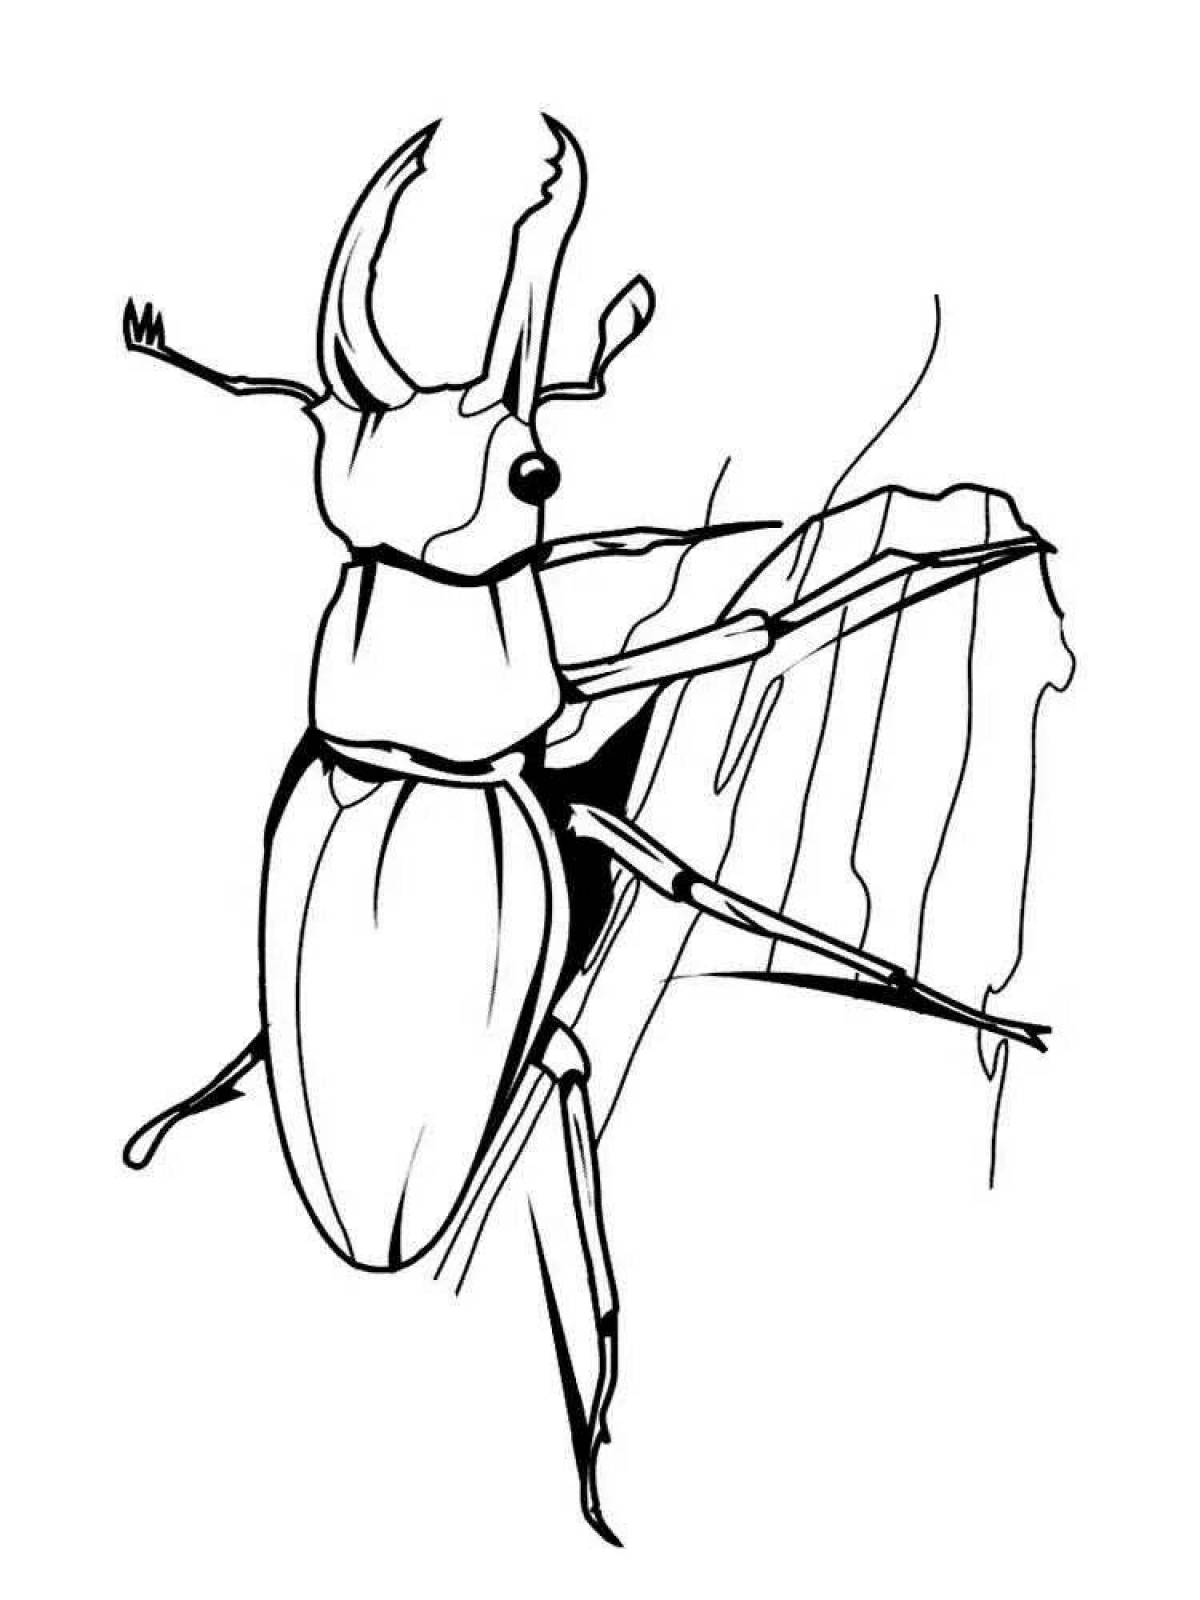 Stag beetle #3